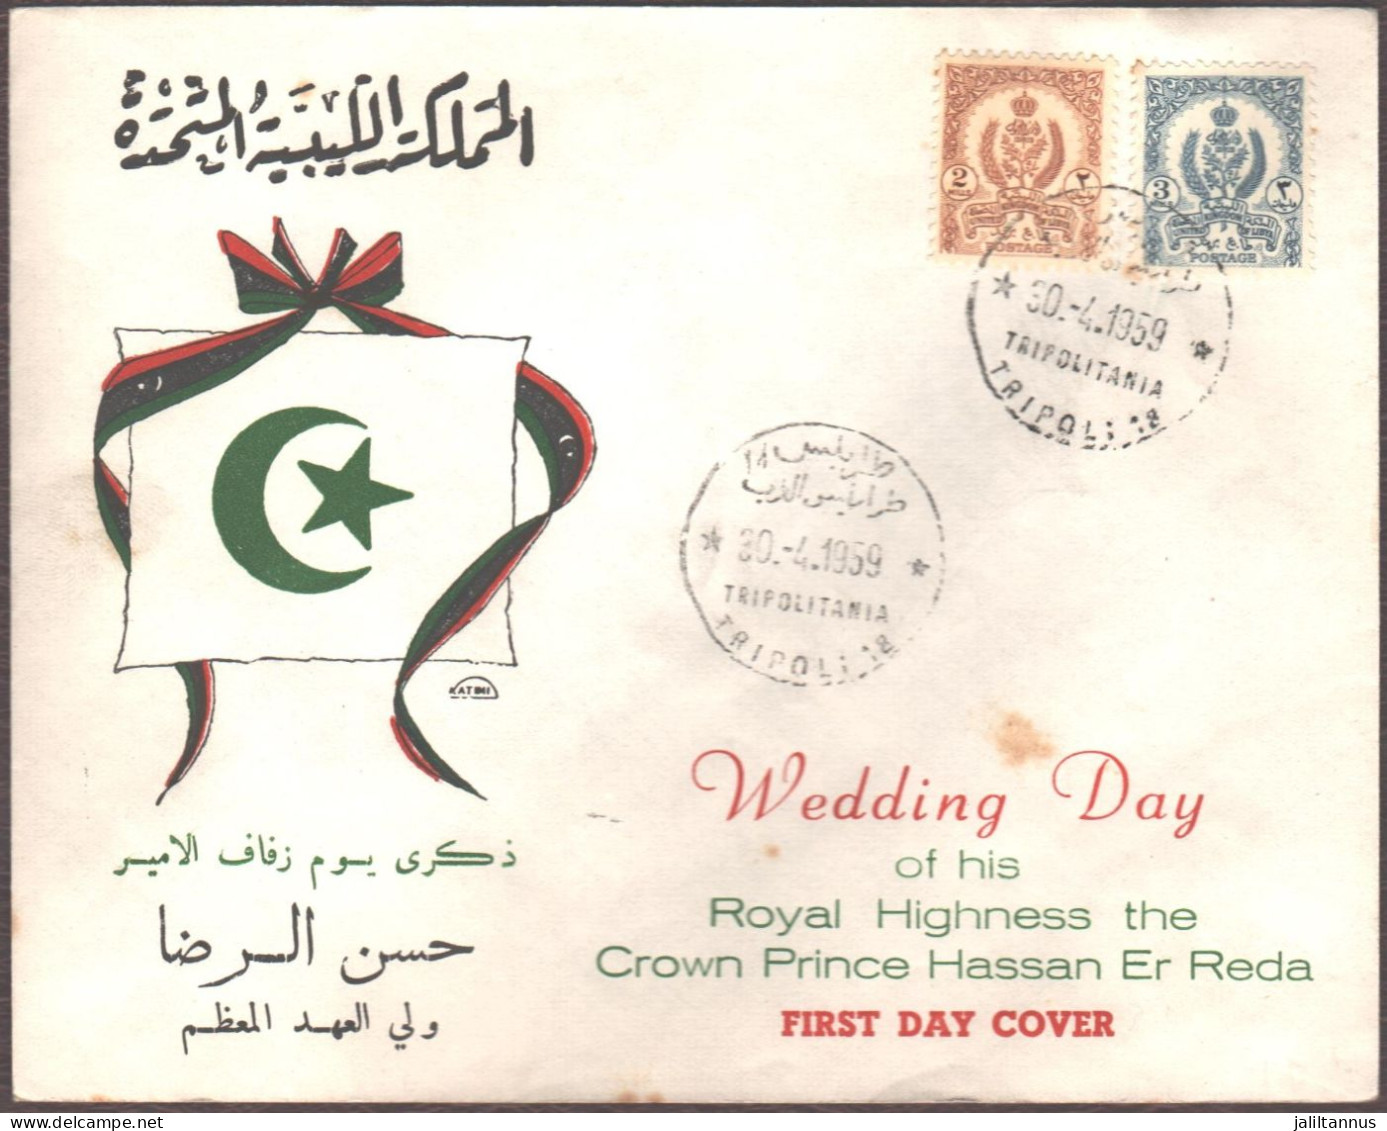 FDC  -UNITED KINGDOM OF LIBYA -  WEDDING DAY OF HIS ROYAL HIGHNESS THE CROWN PRINCE HASSAN ER REDA 1959 - Libye